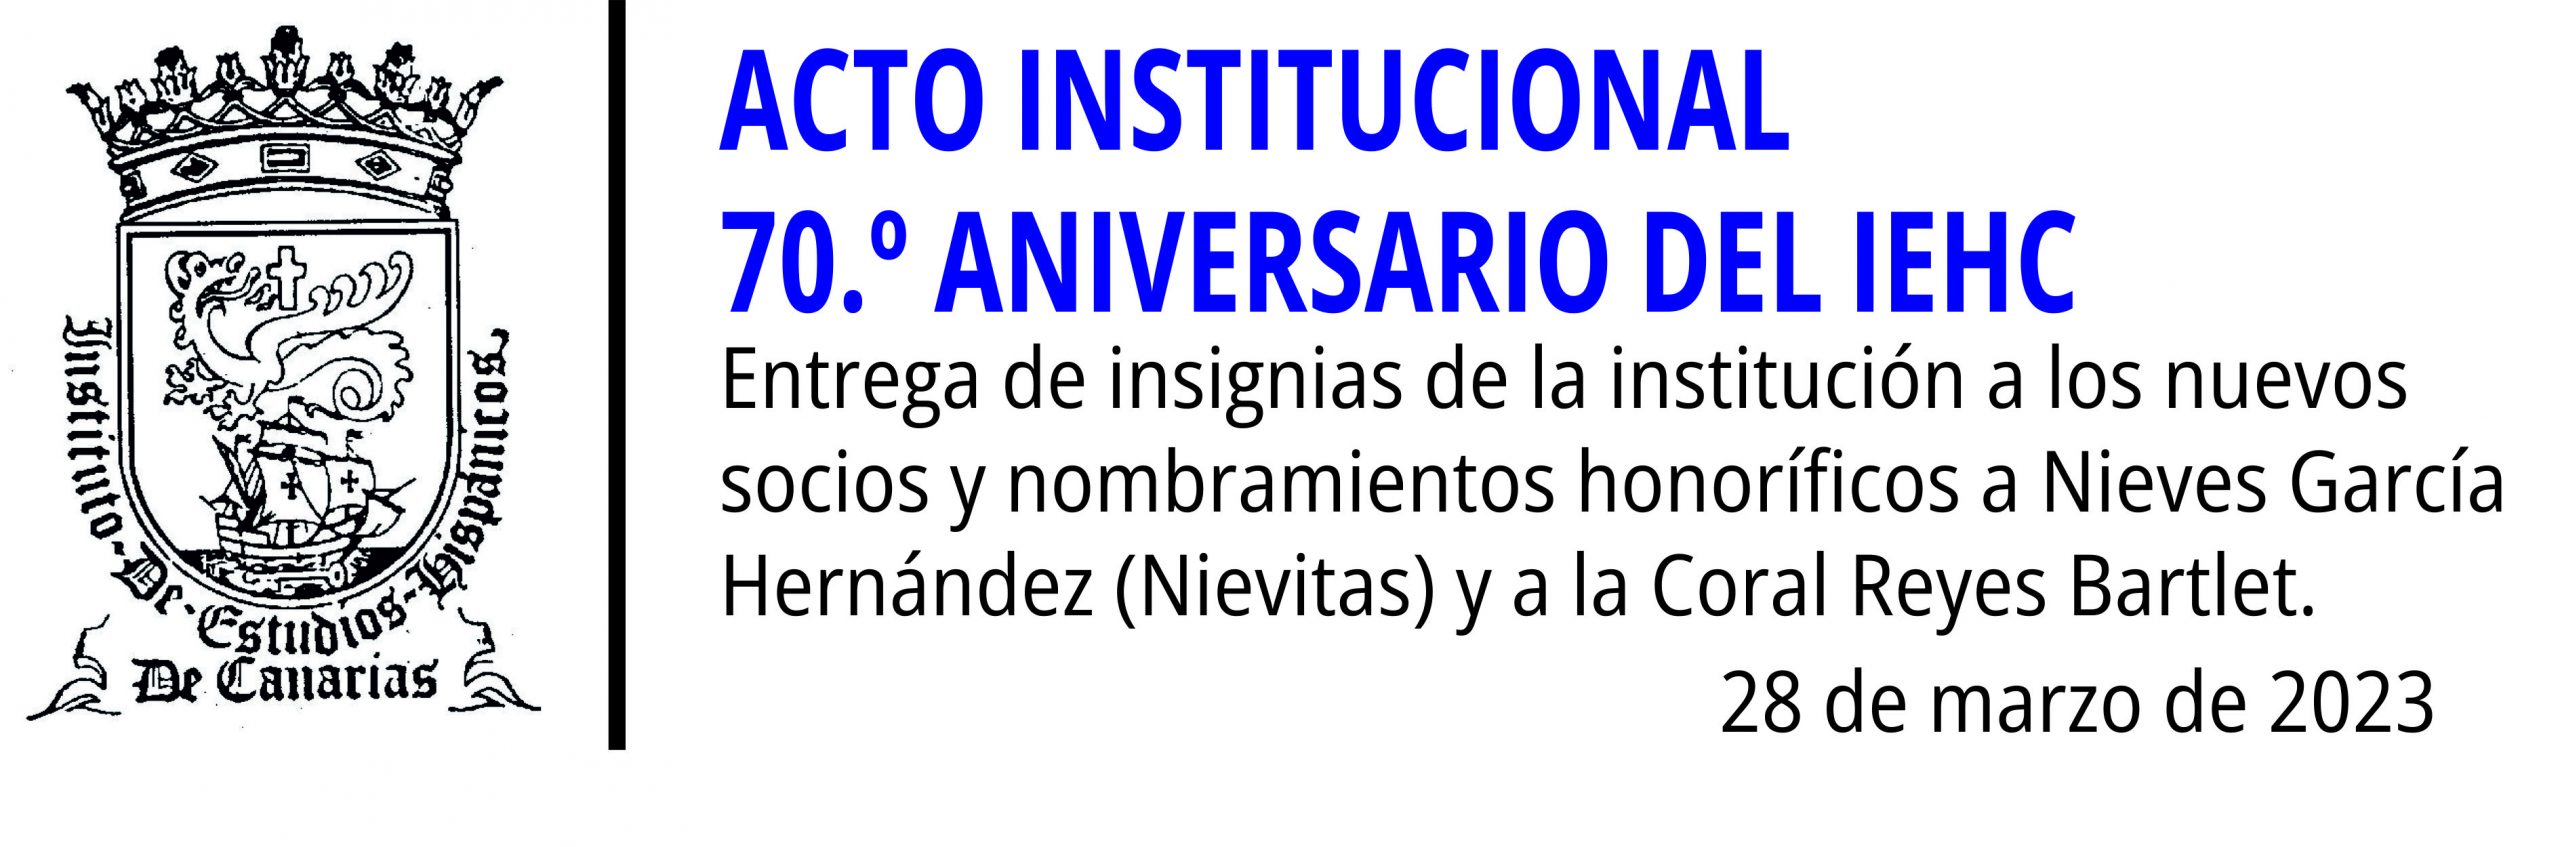 Acto institucional 70.º Aniversario del IEHC.